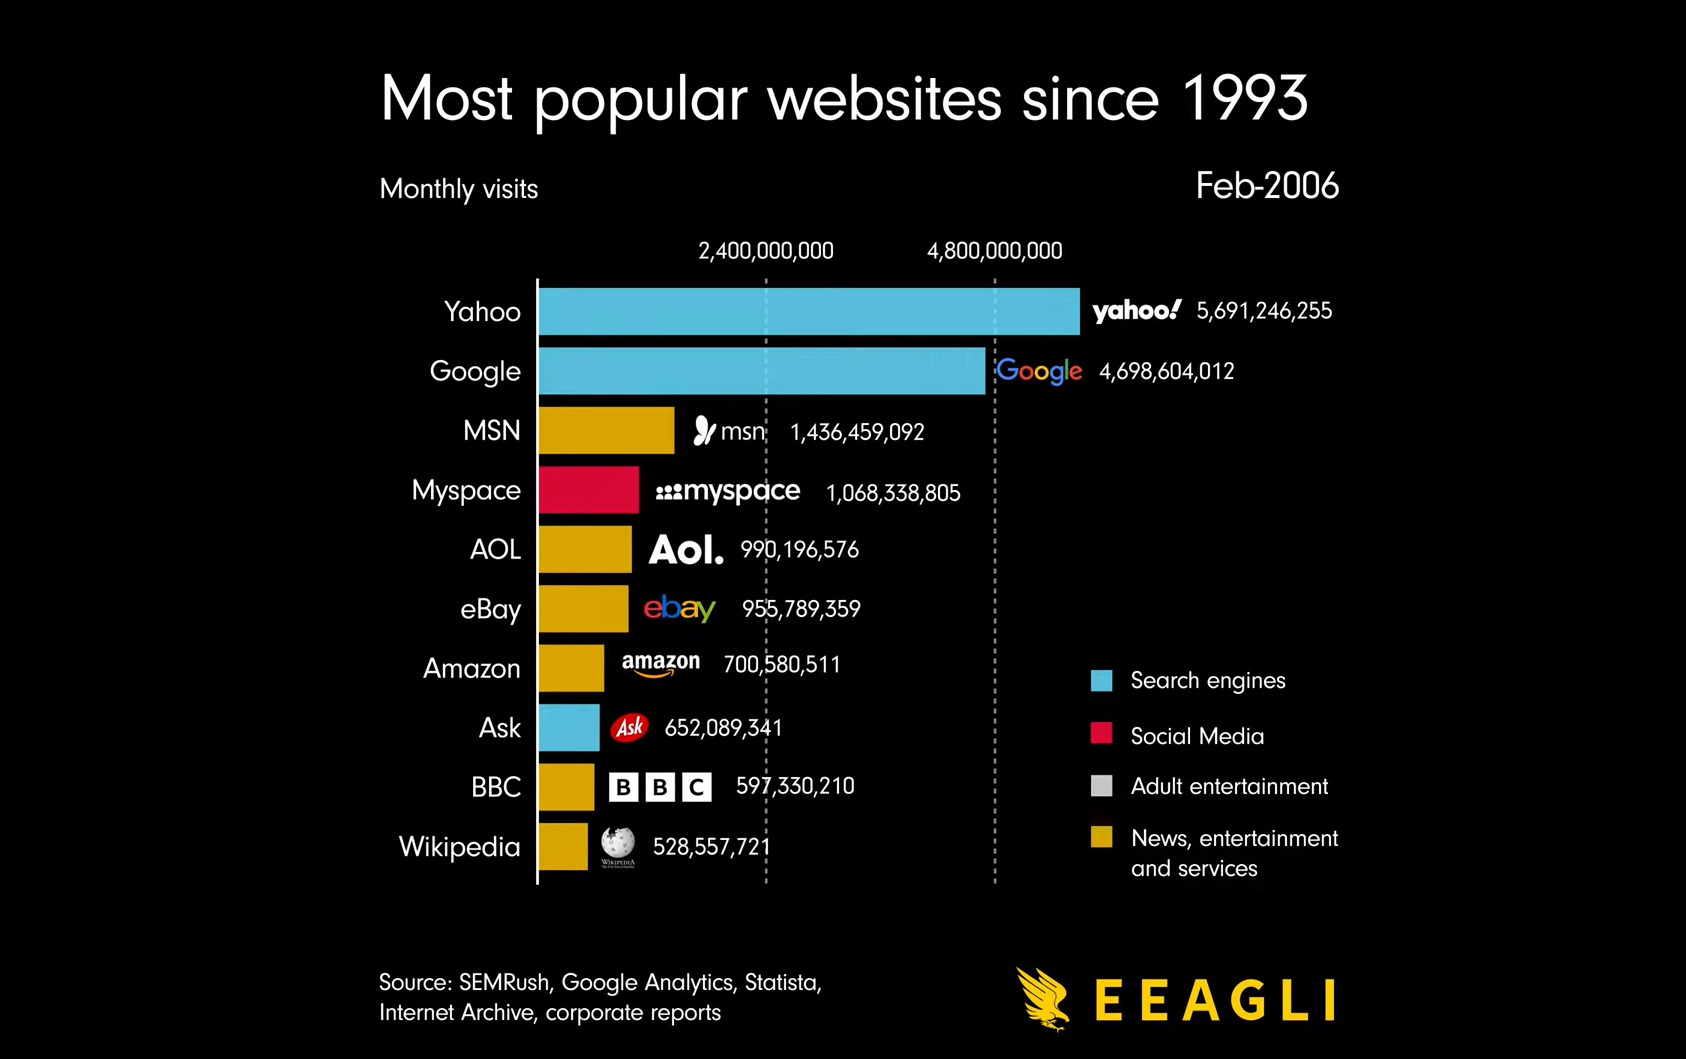 Most Popular Websites Since 1993